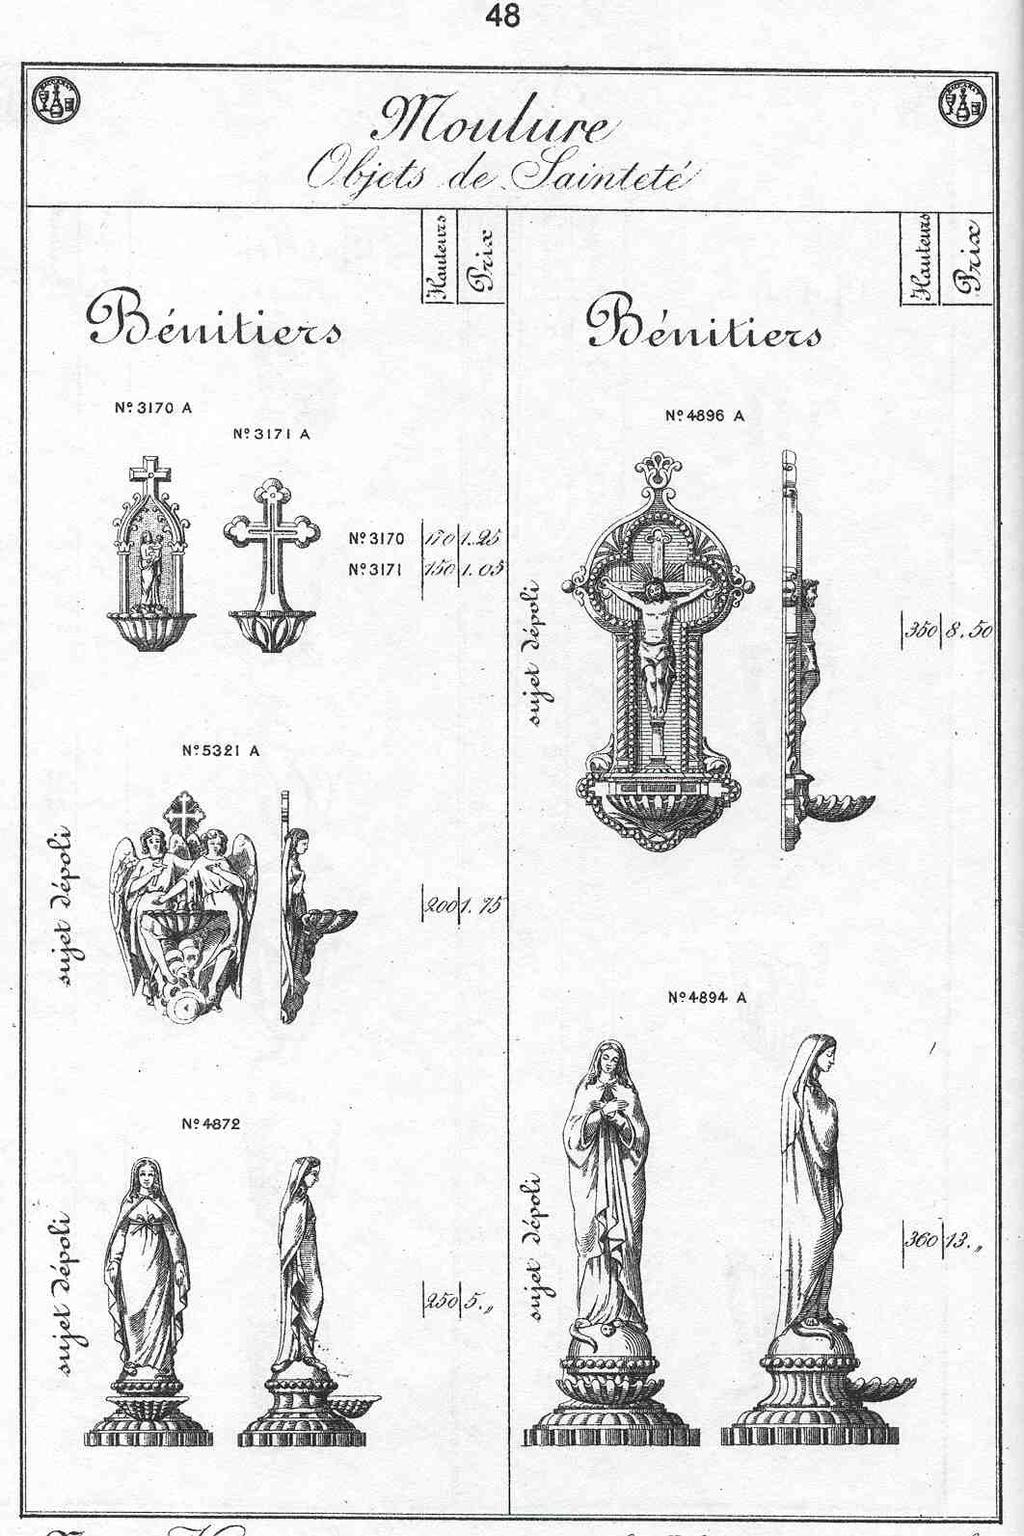 Abb. 2001-04/348 MB Baccarat 1893, Tafel 48, Objets de Sainteté, Reprint Edition